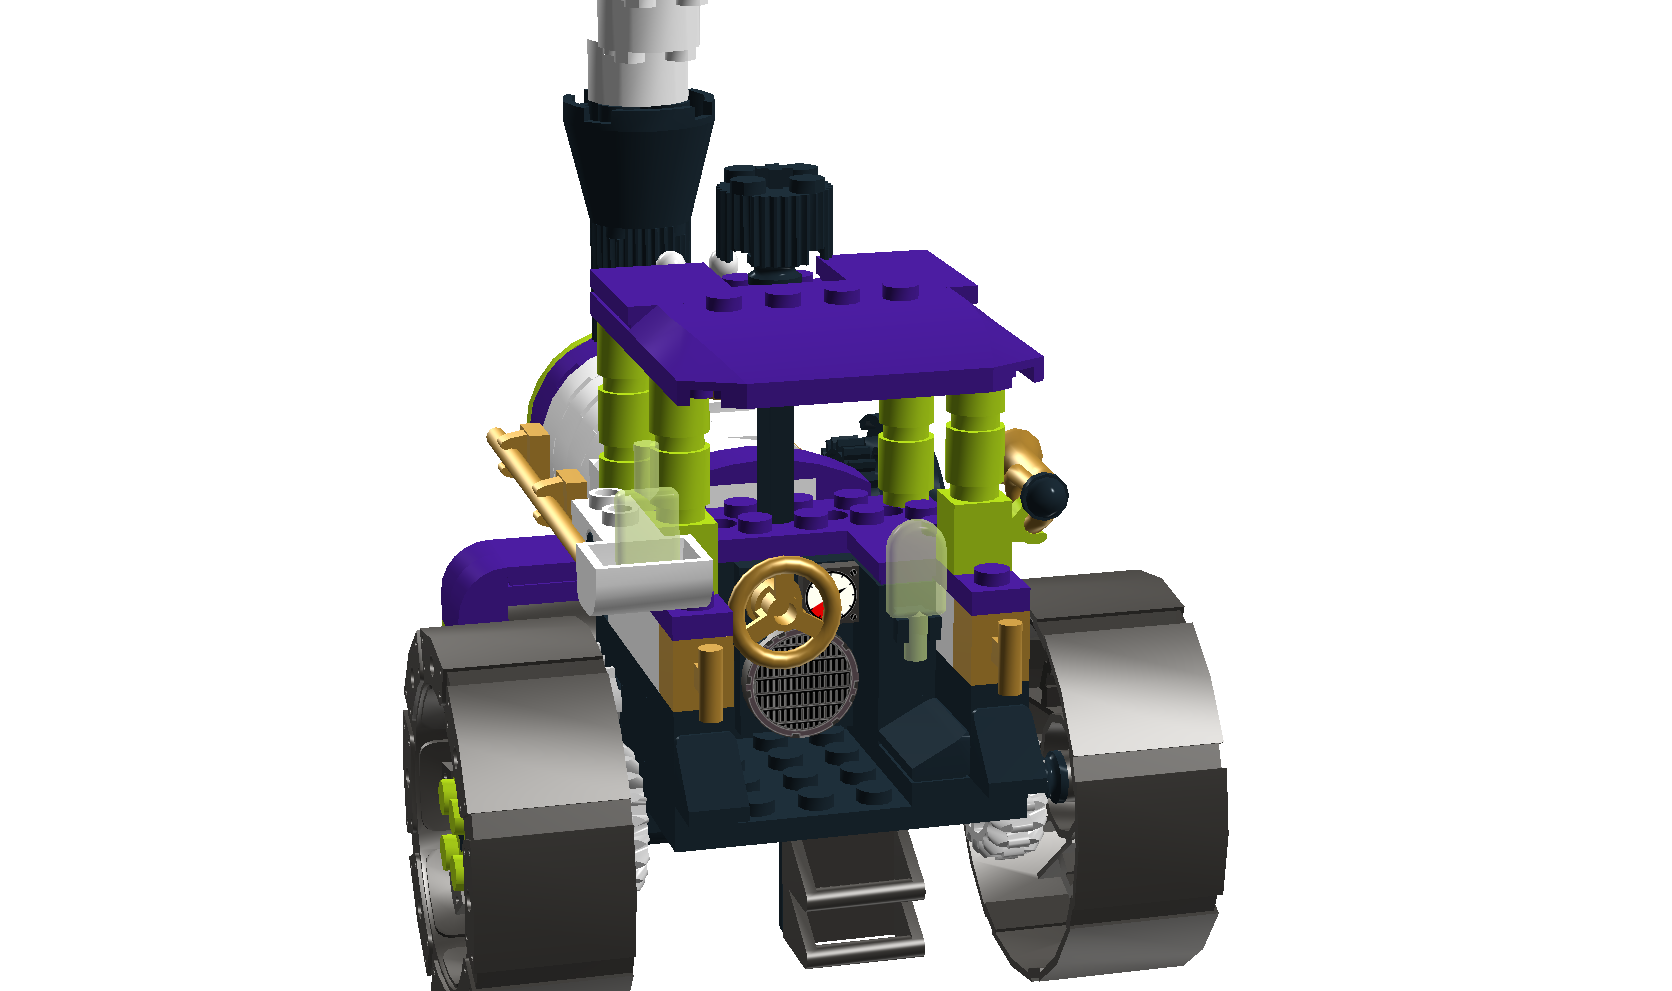 Image - Jokersteamroller5.png - Brickipedia, the LEGO Wiki